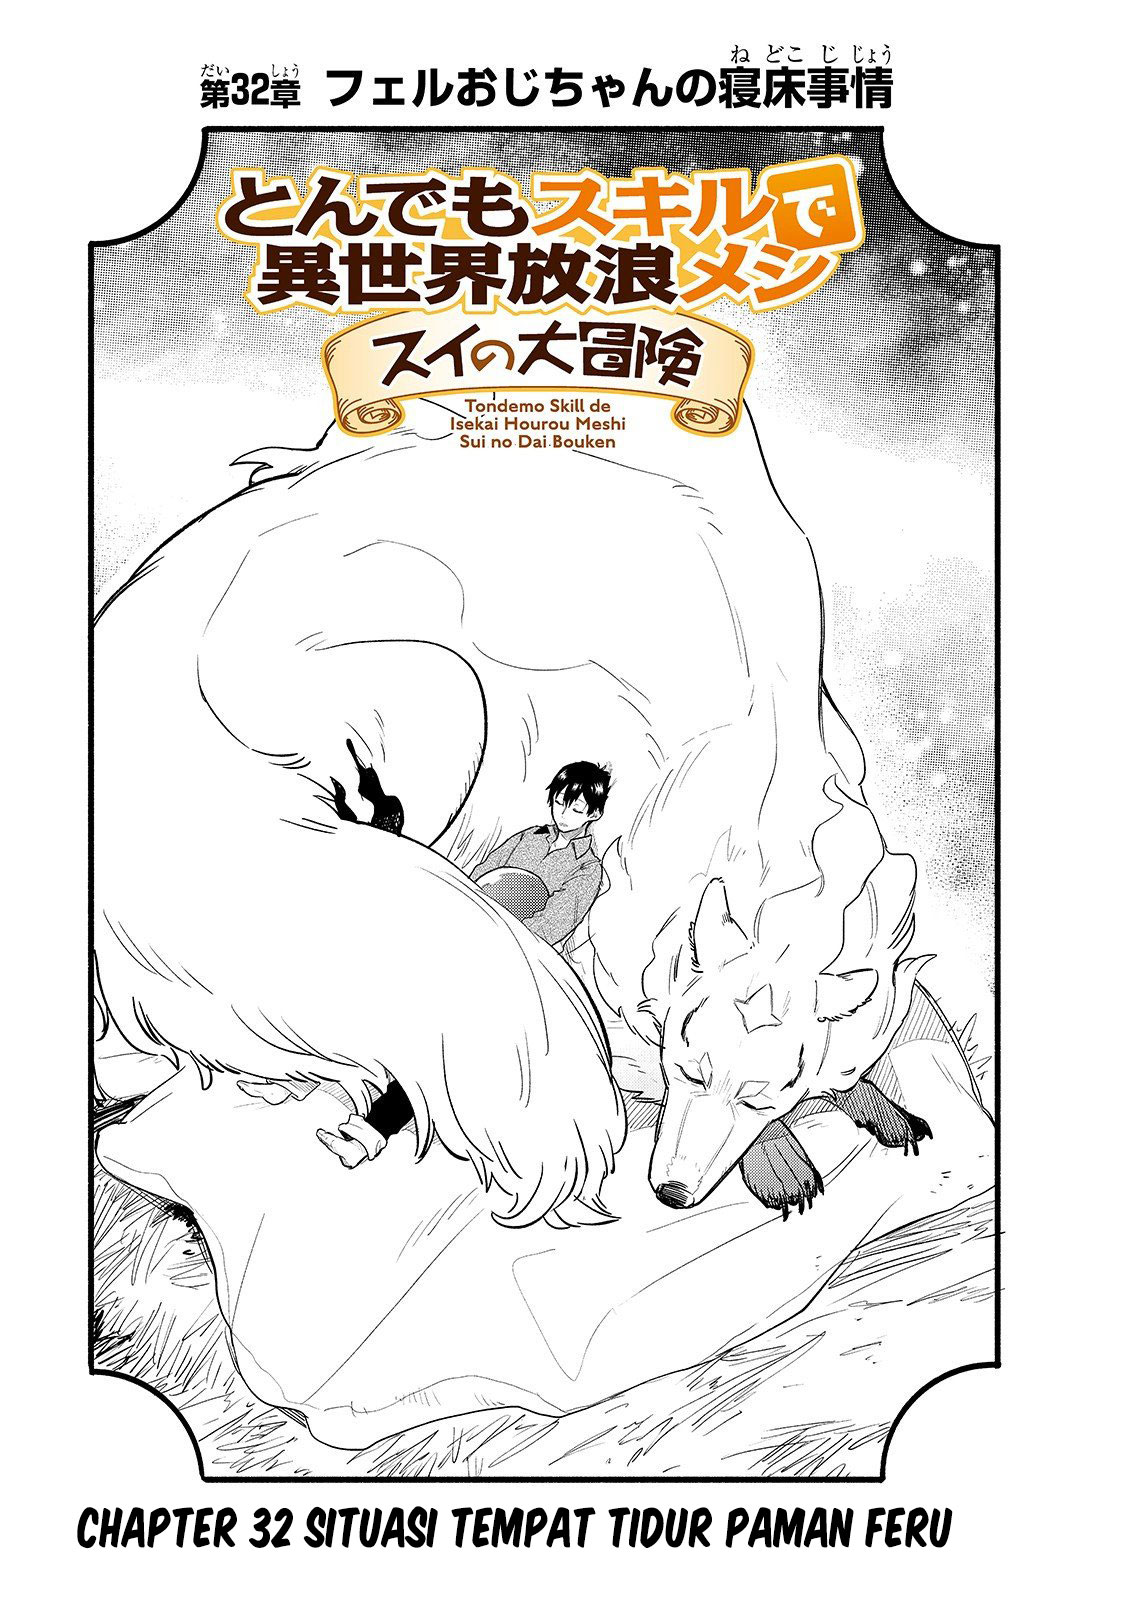 Tondemo Skill de Isekai Hourou Meshi: Sui no Daibouken Chapter 32 fix